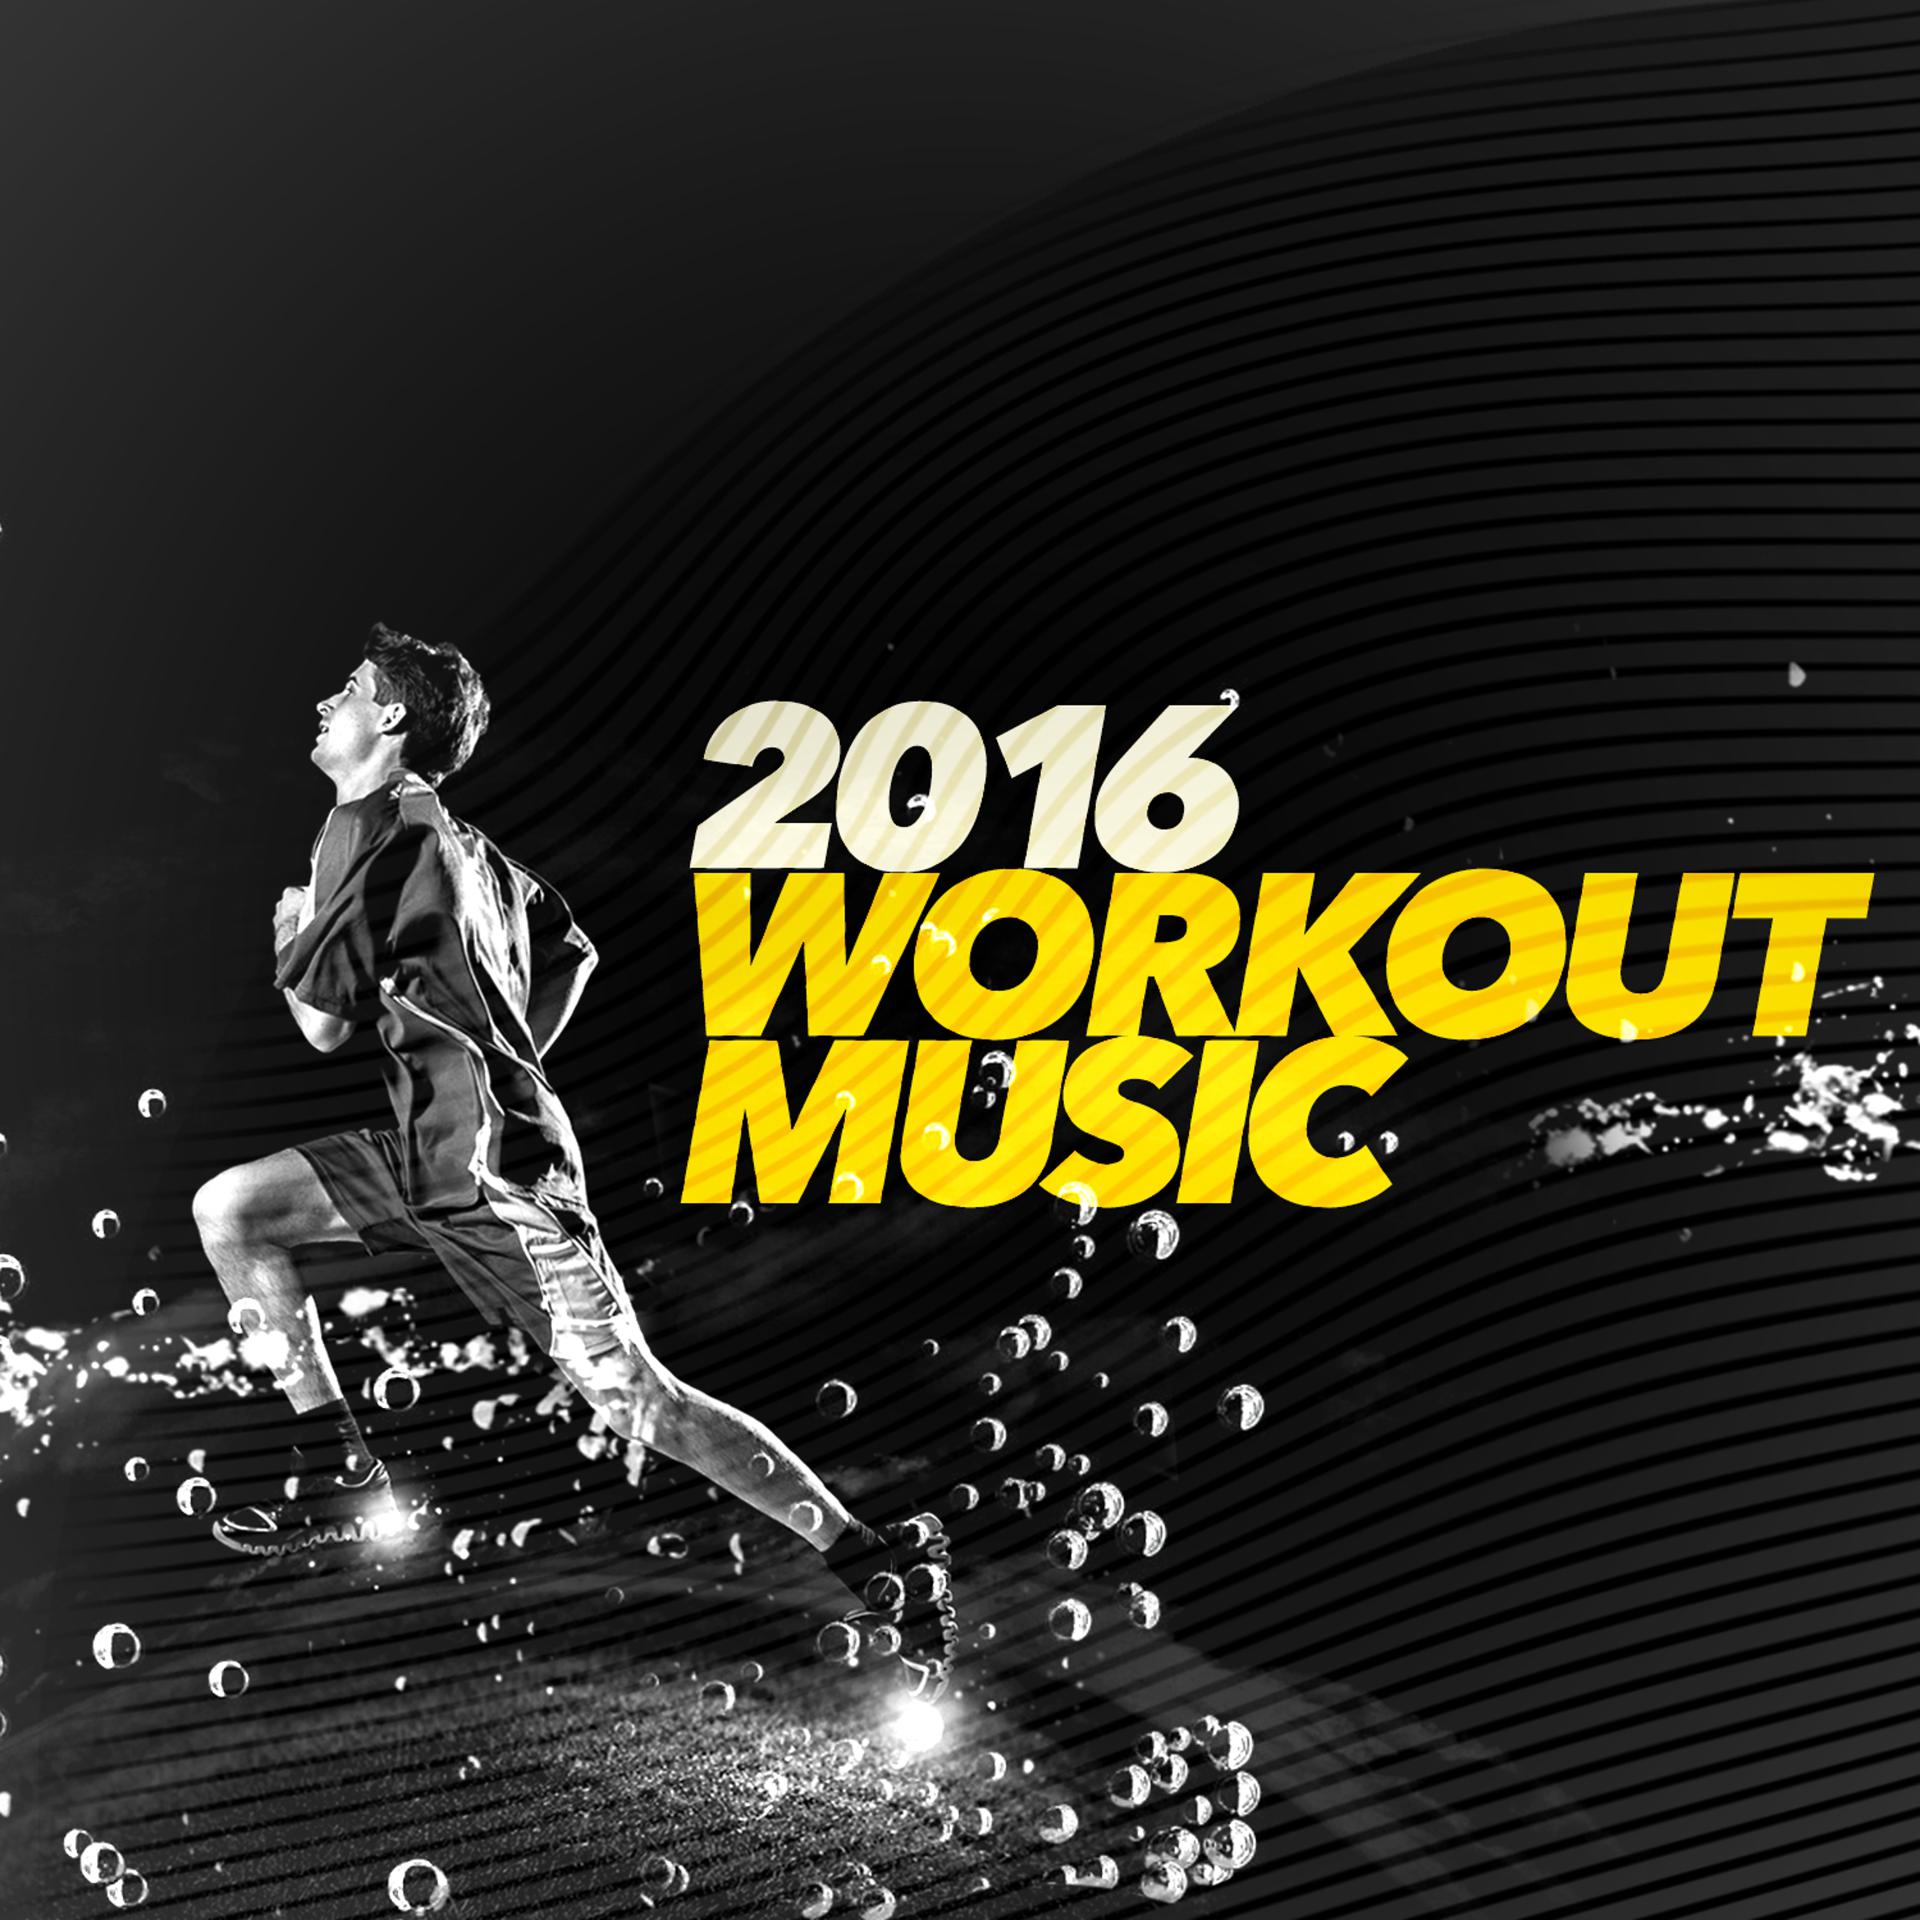 Зарубежные песни 2016. 128 BPM музыка. Music 2016. Workout Music обложка альбома. Музыка из 2016.